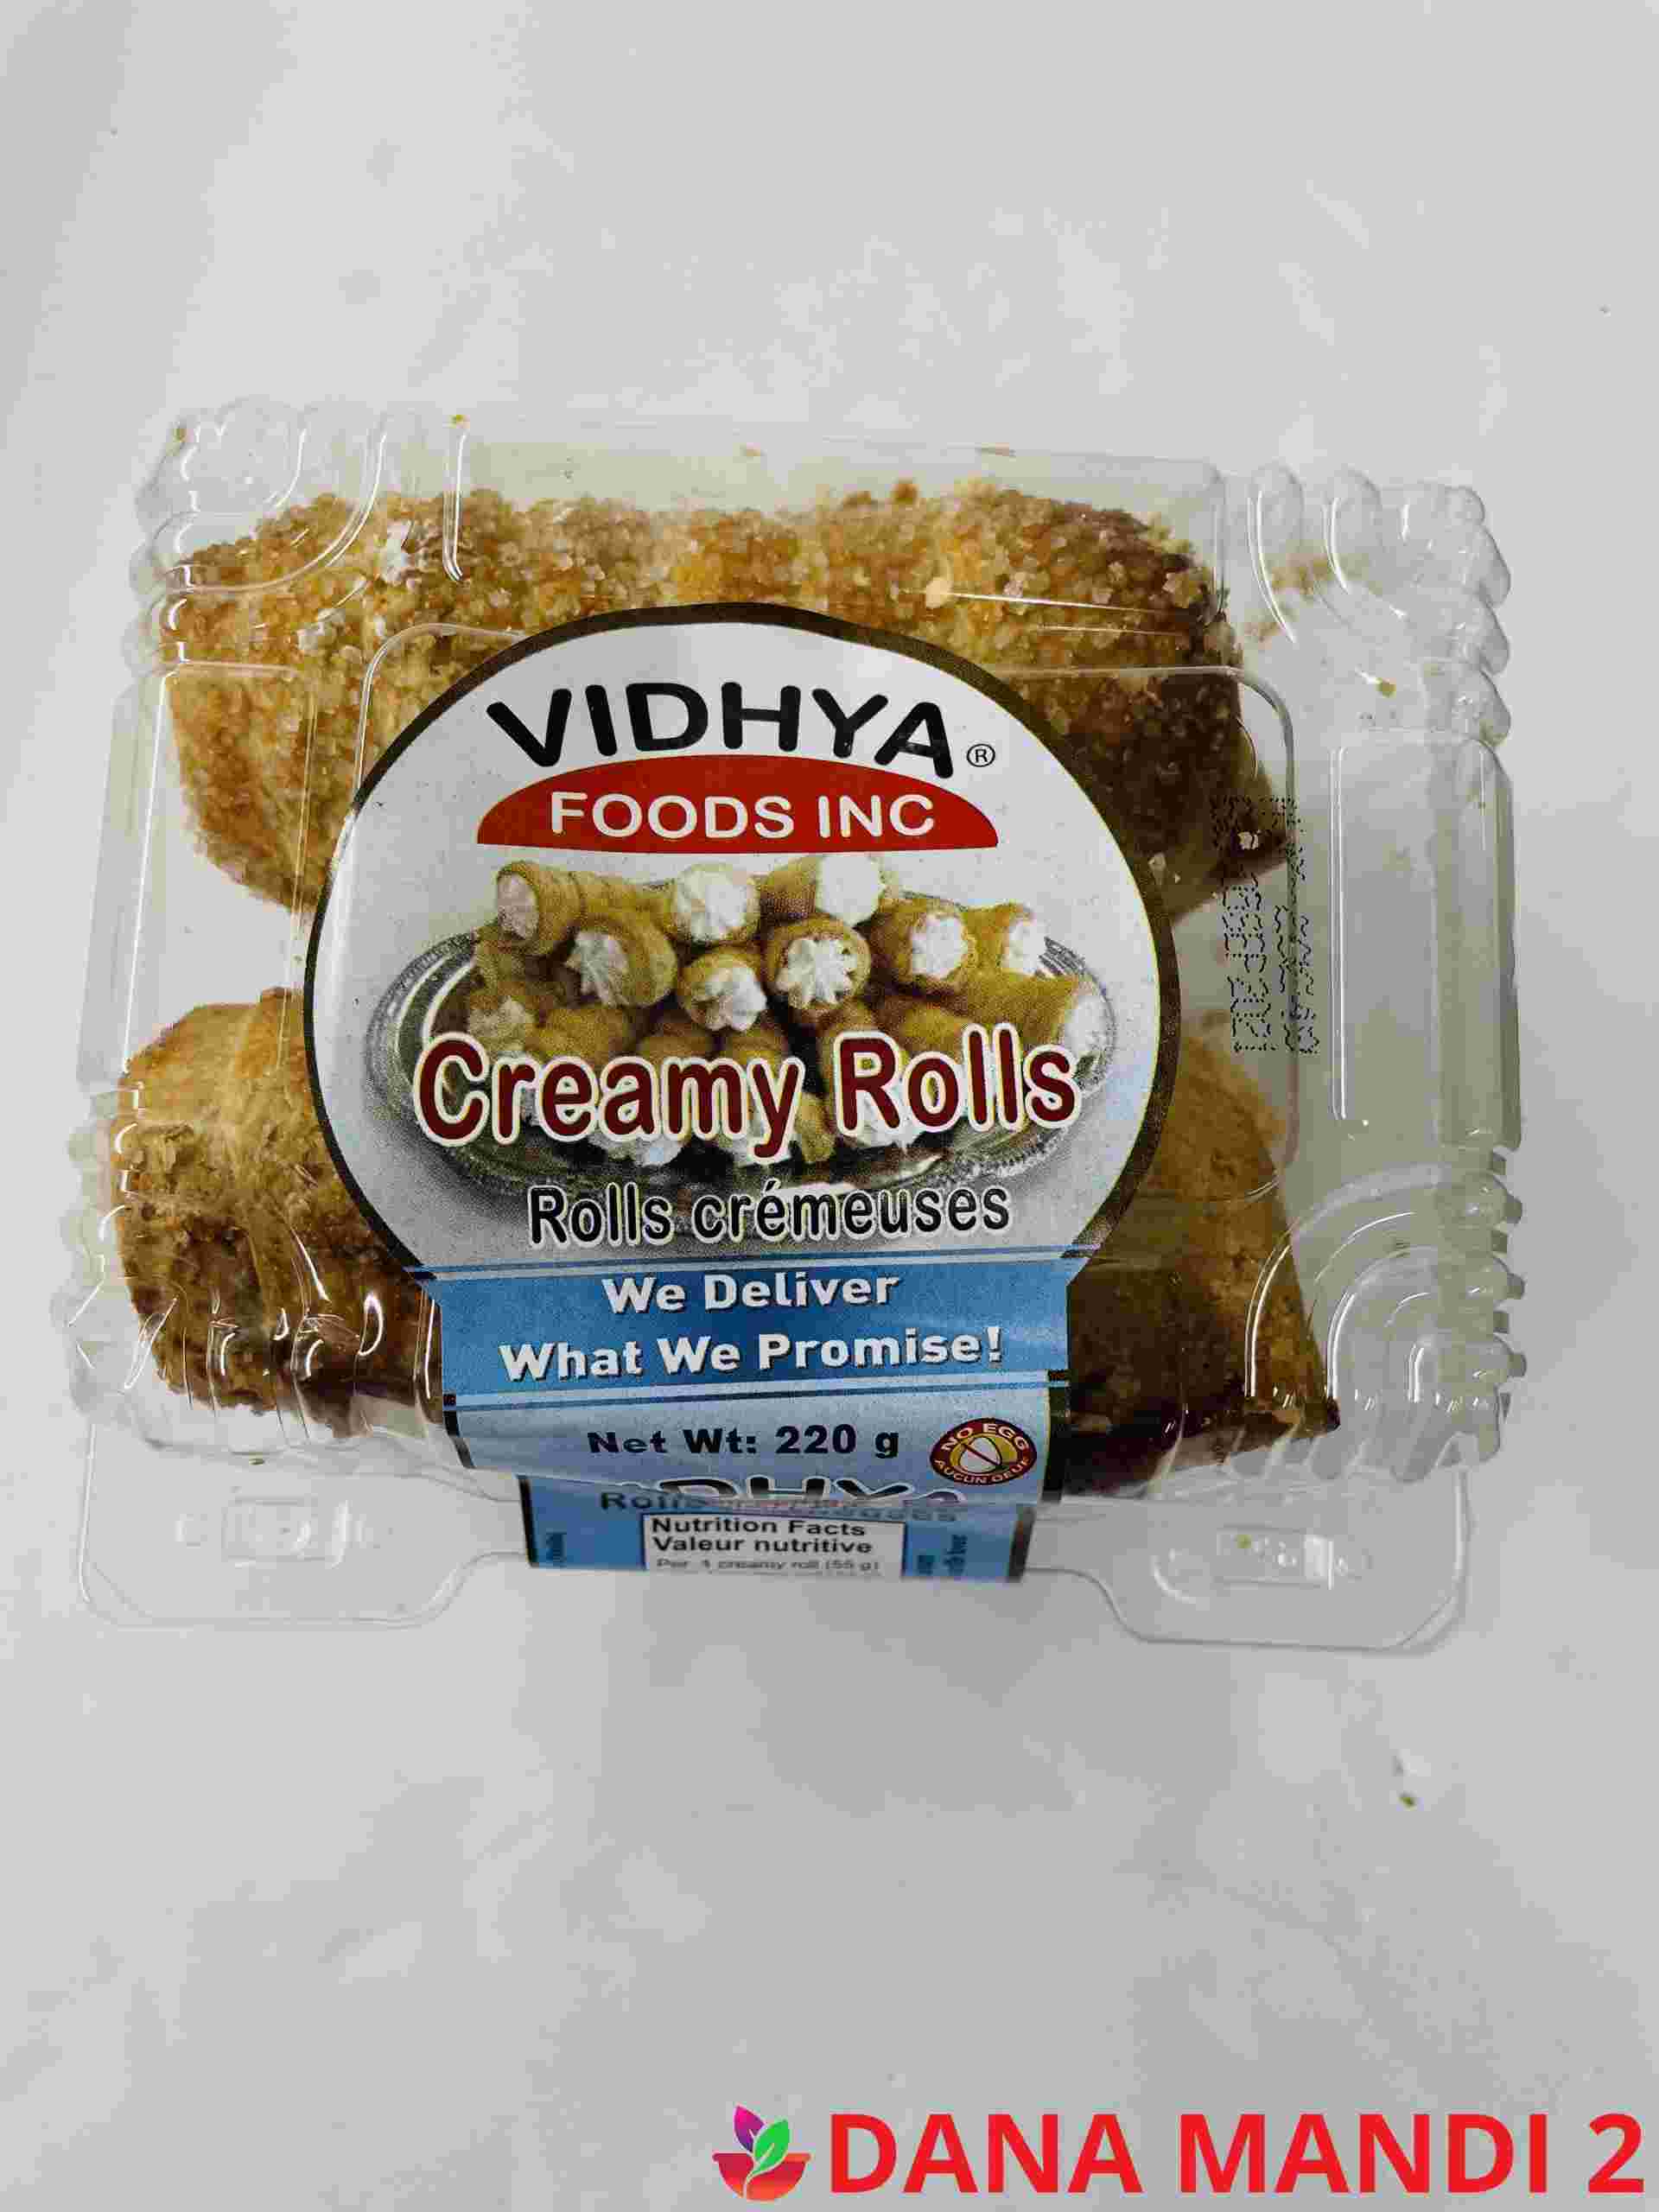 VIDHYA Creamy Rolls